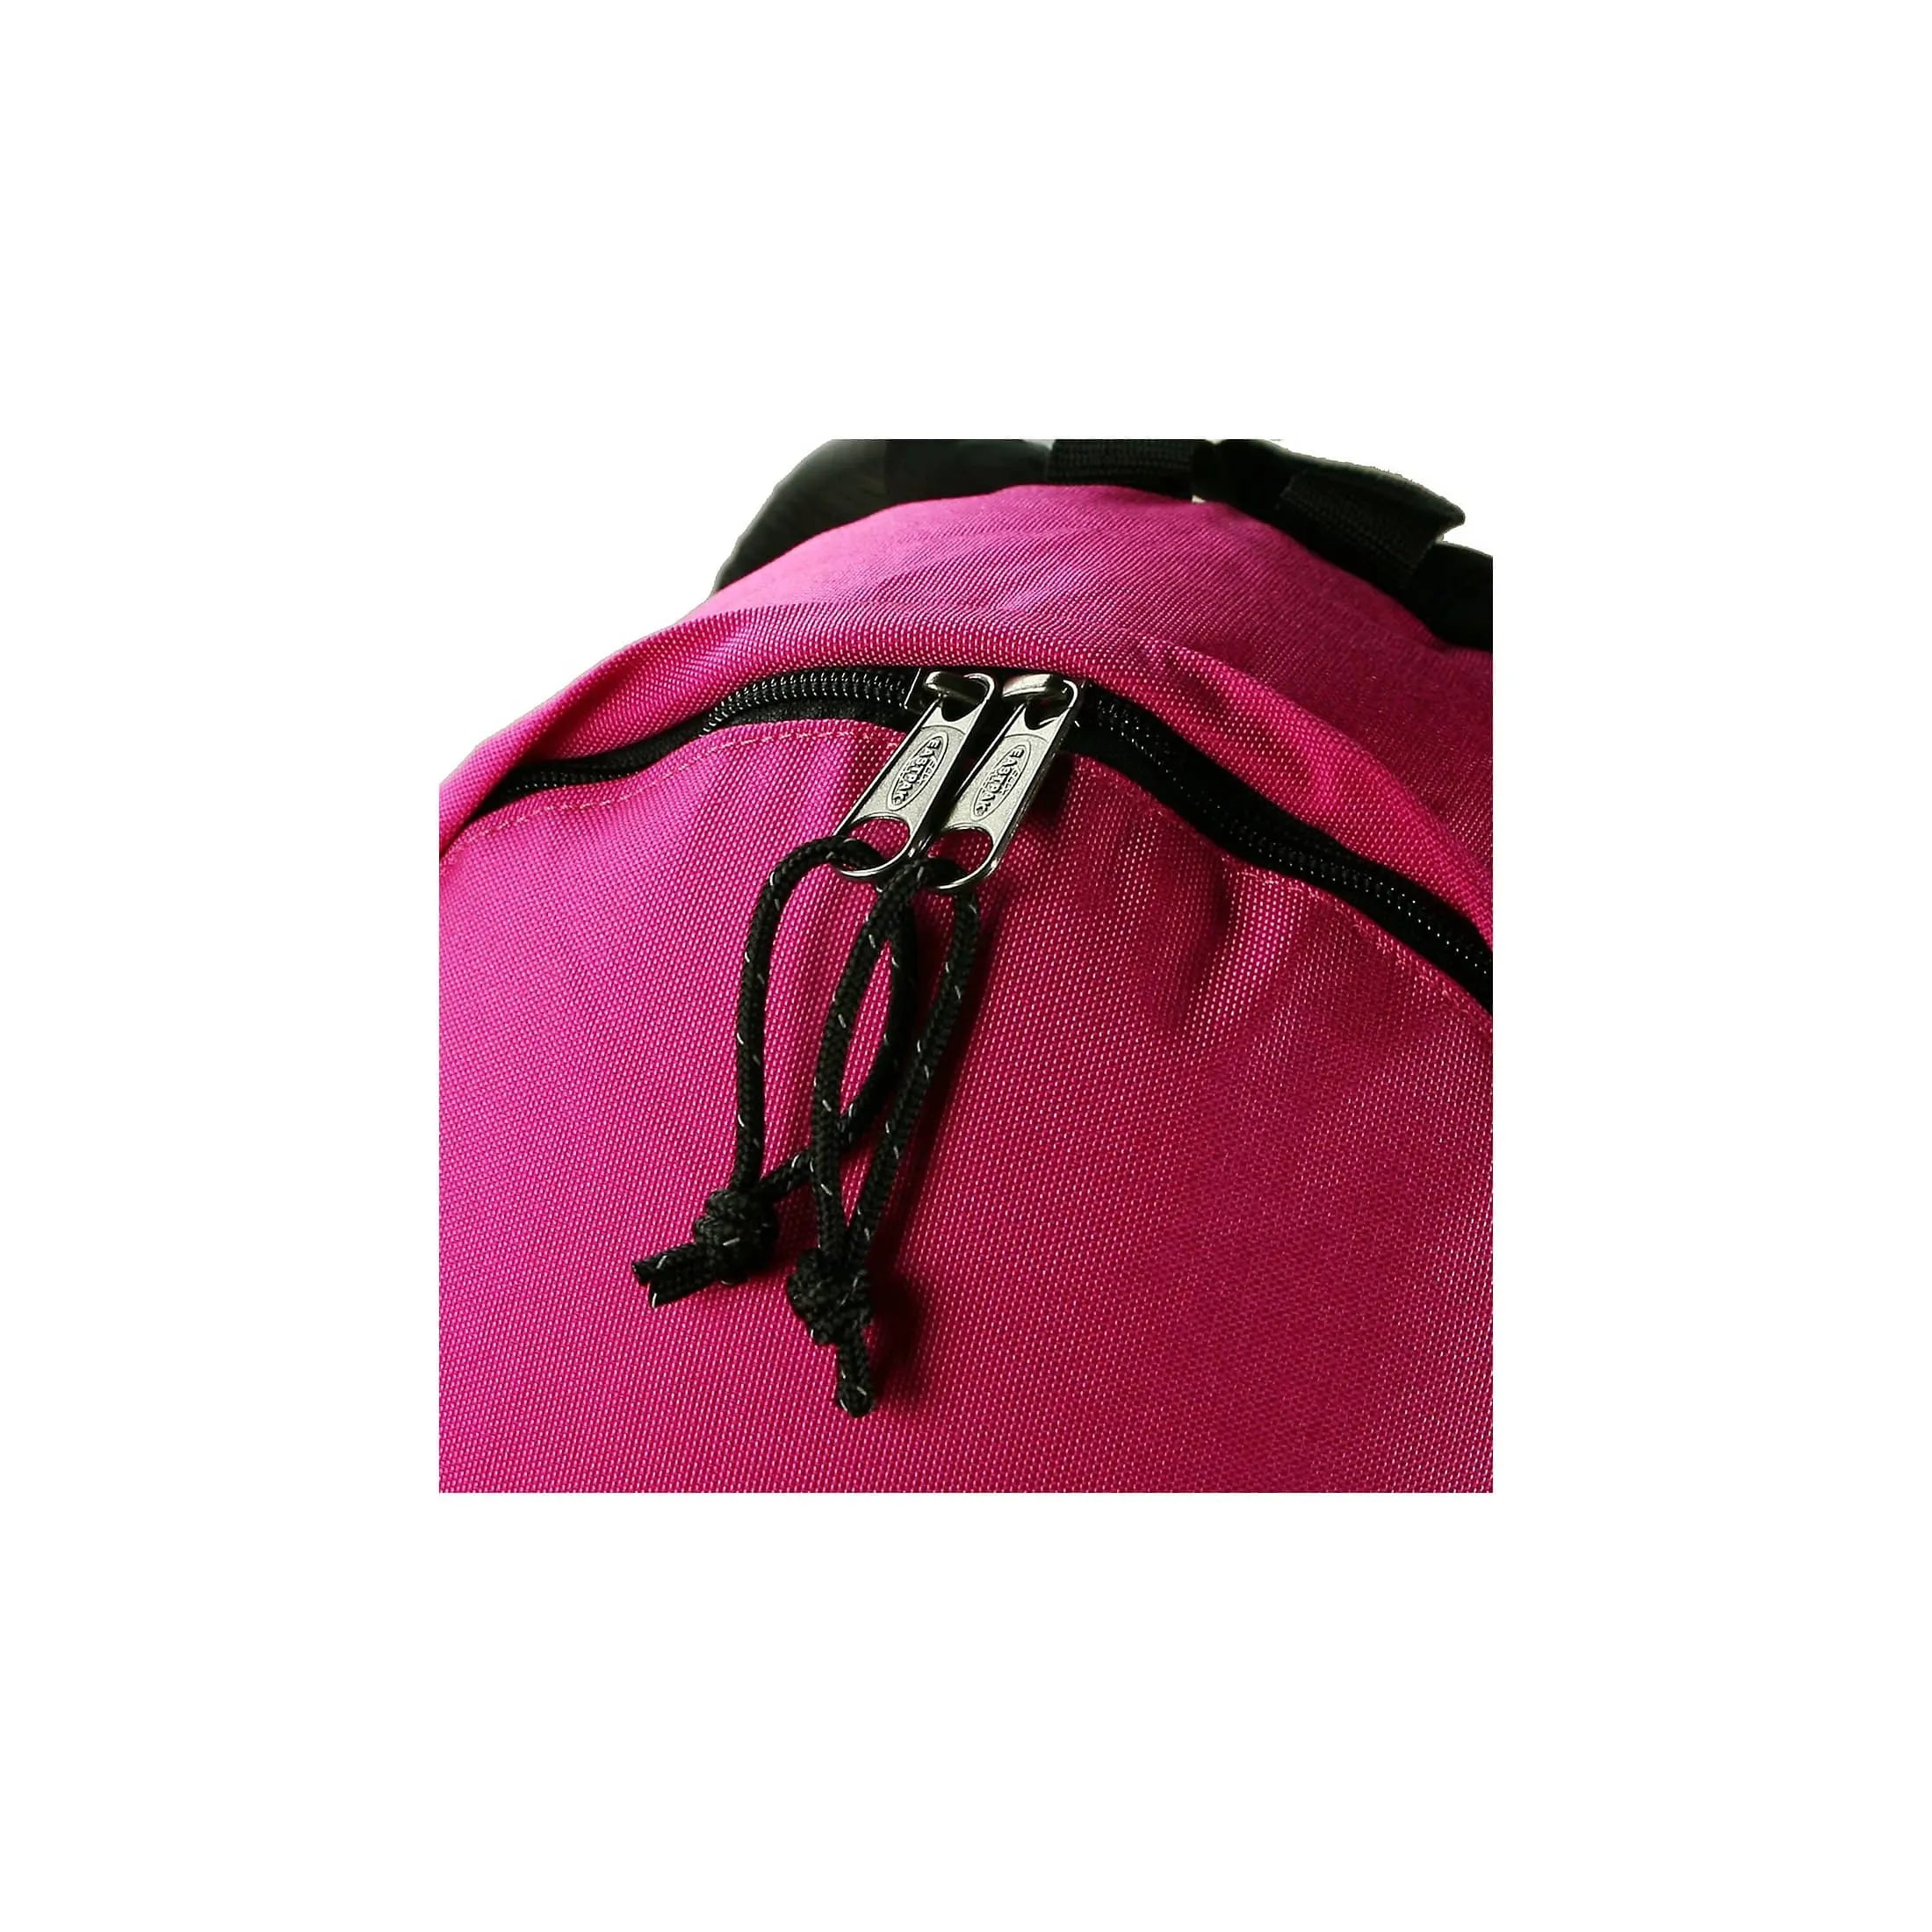 Eastpak Authentic Orbit leisure backpack 33 cm - black denim